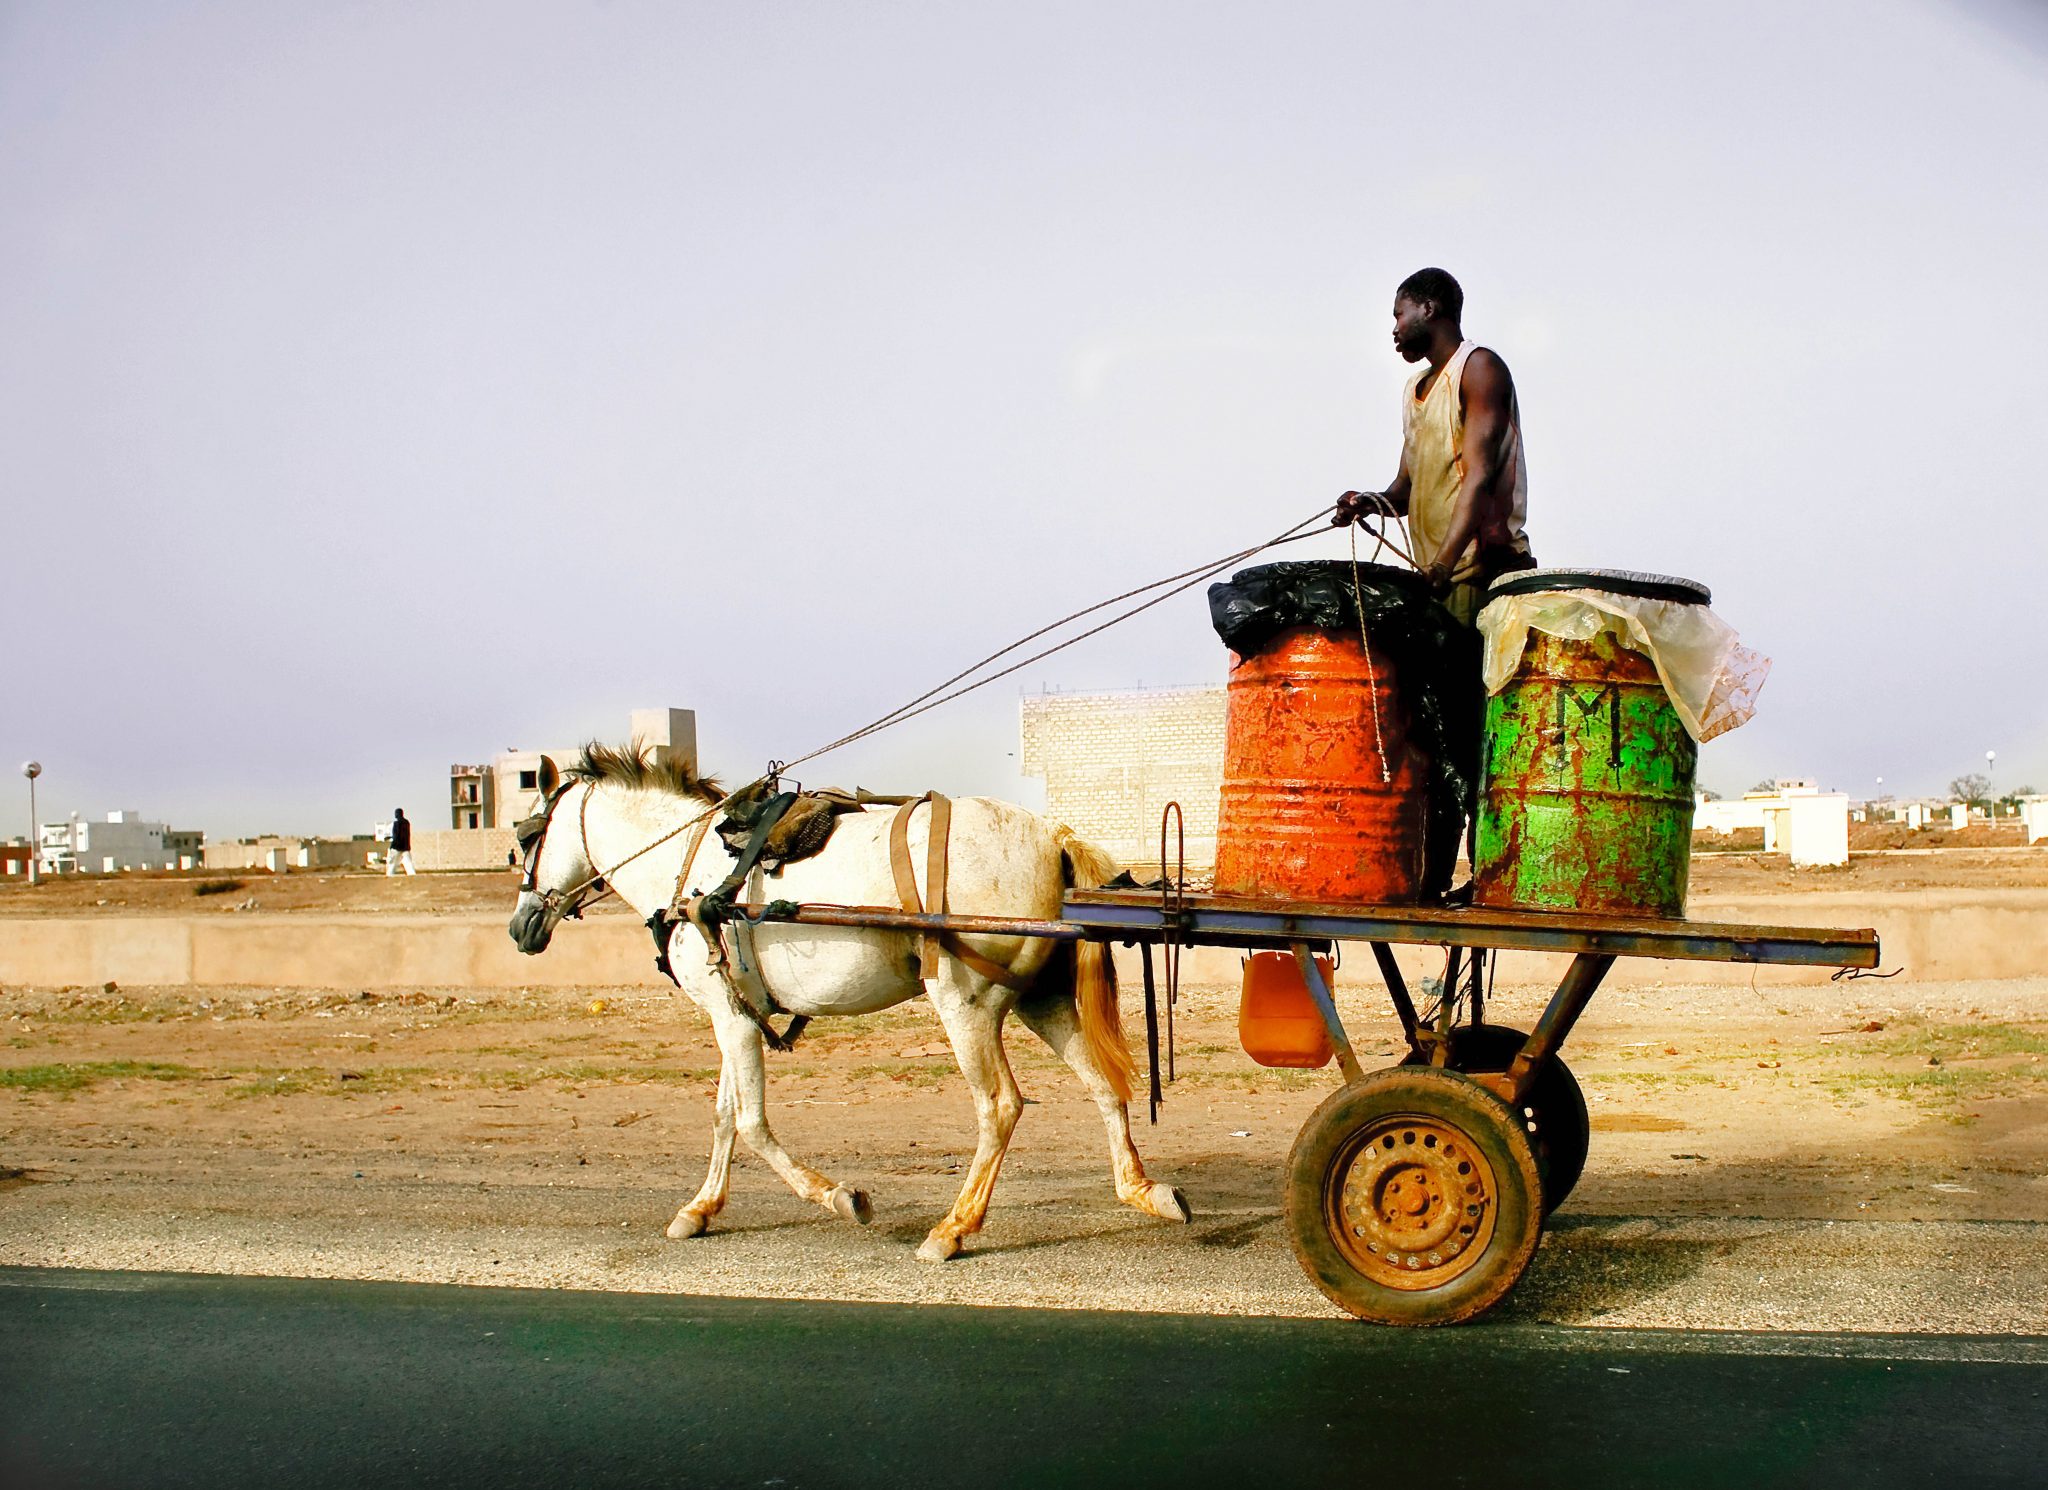 Man on Horse-Drawn Cart in Kinshasa